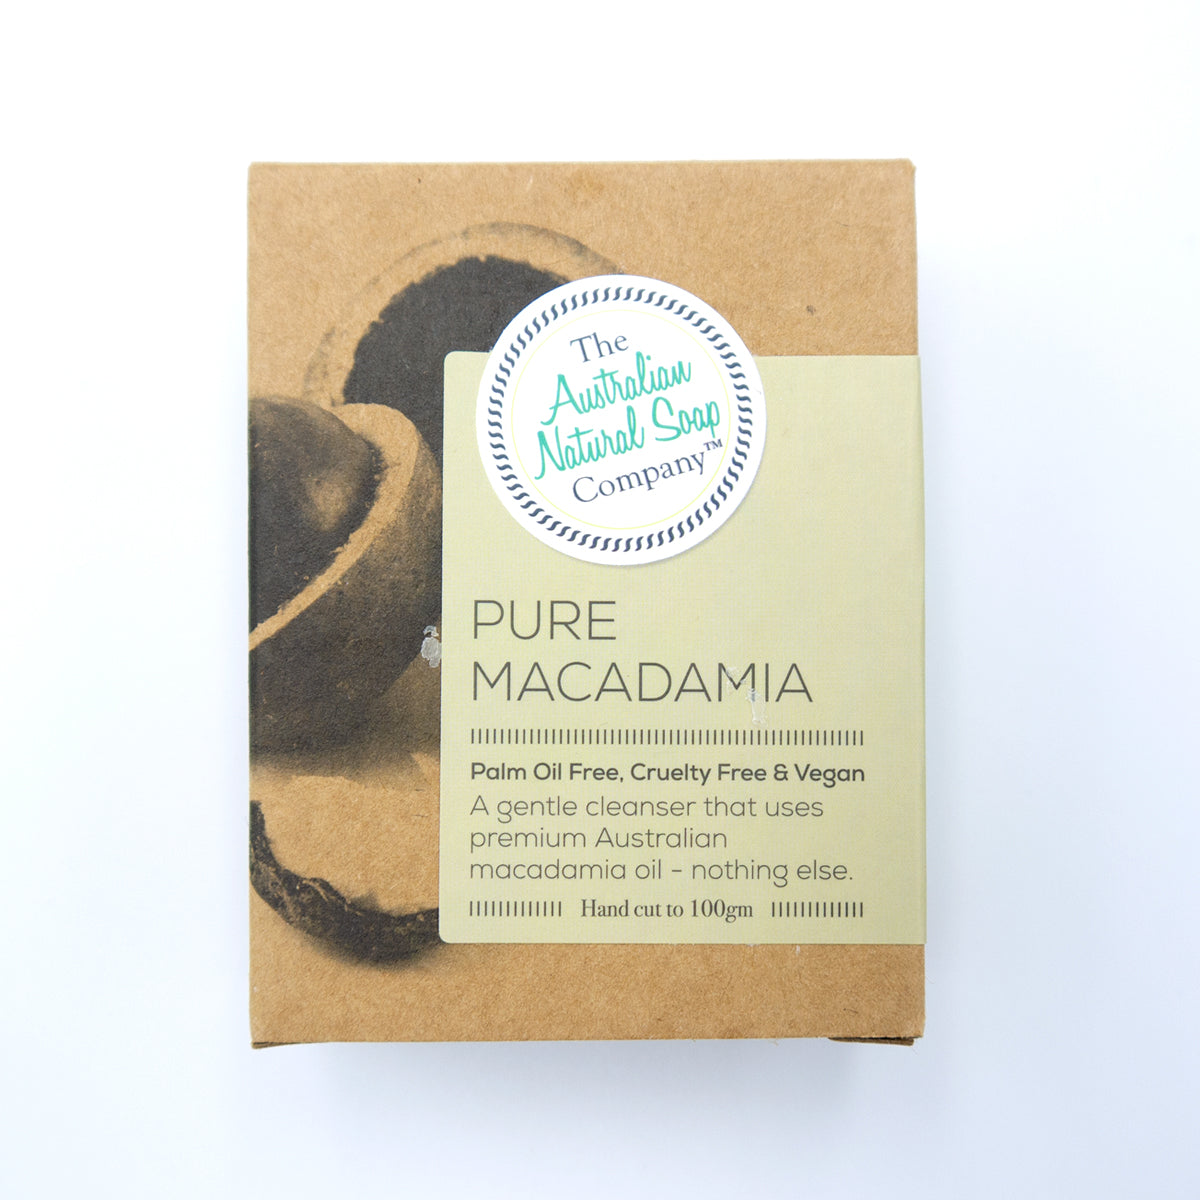 Pure Macadamia Face Soap